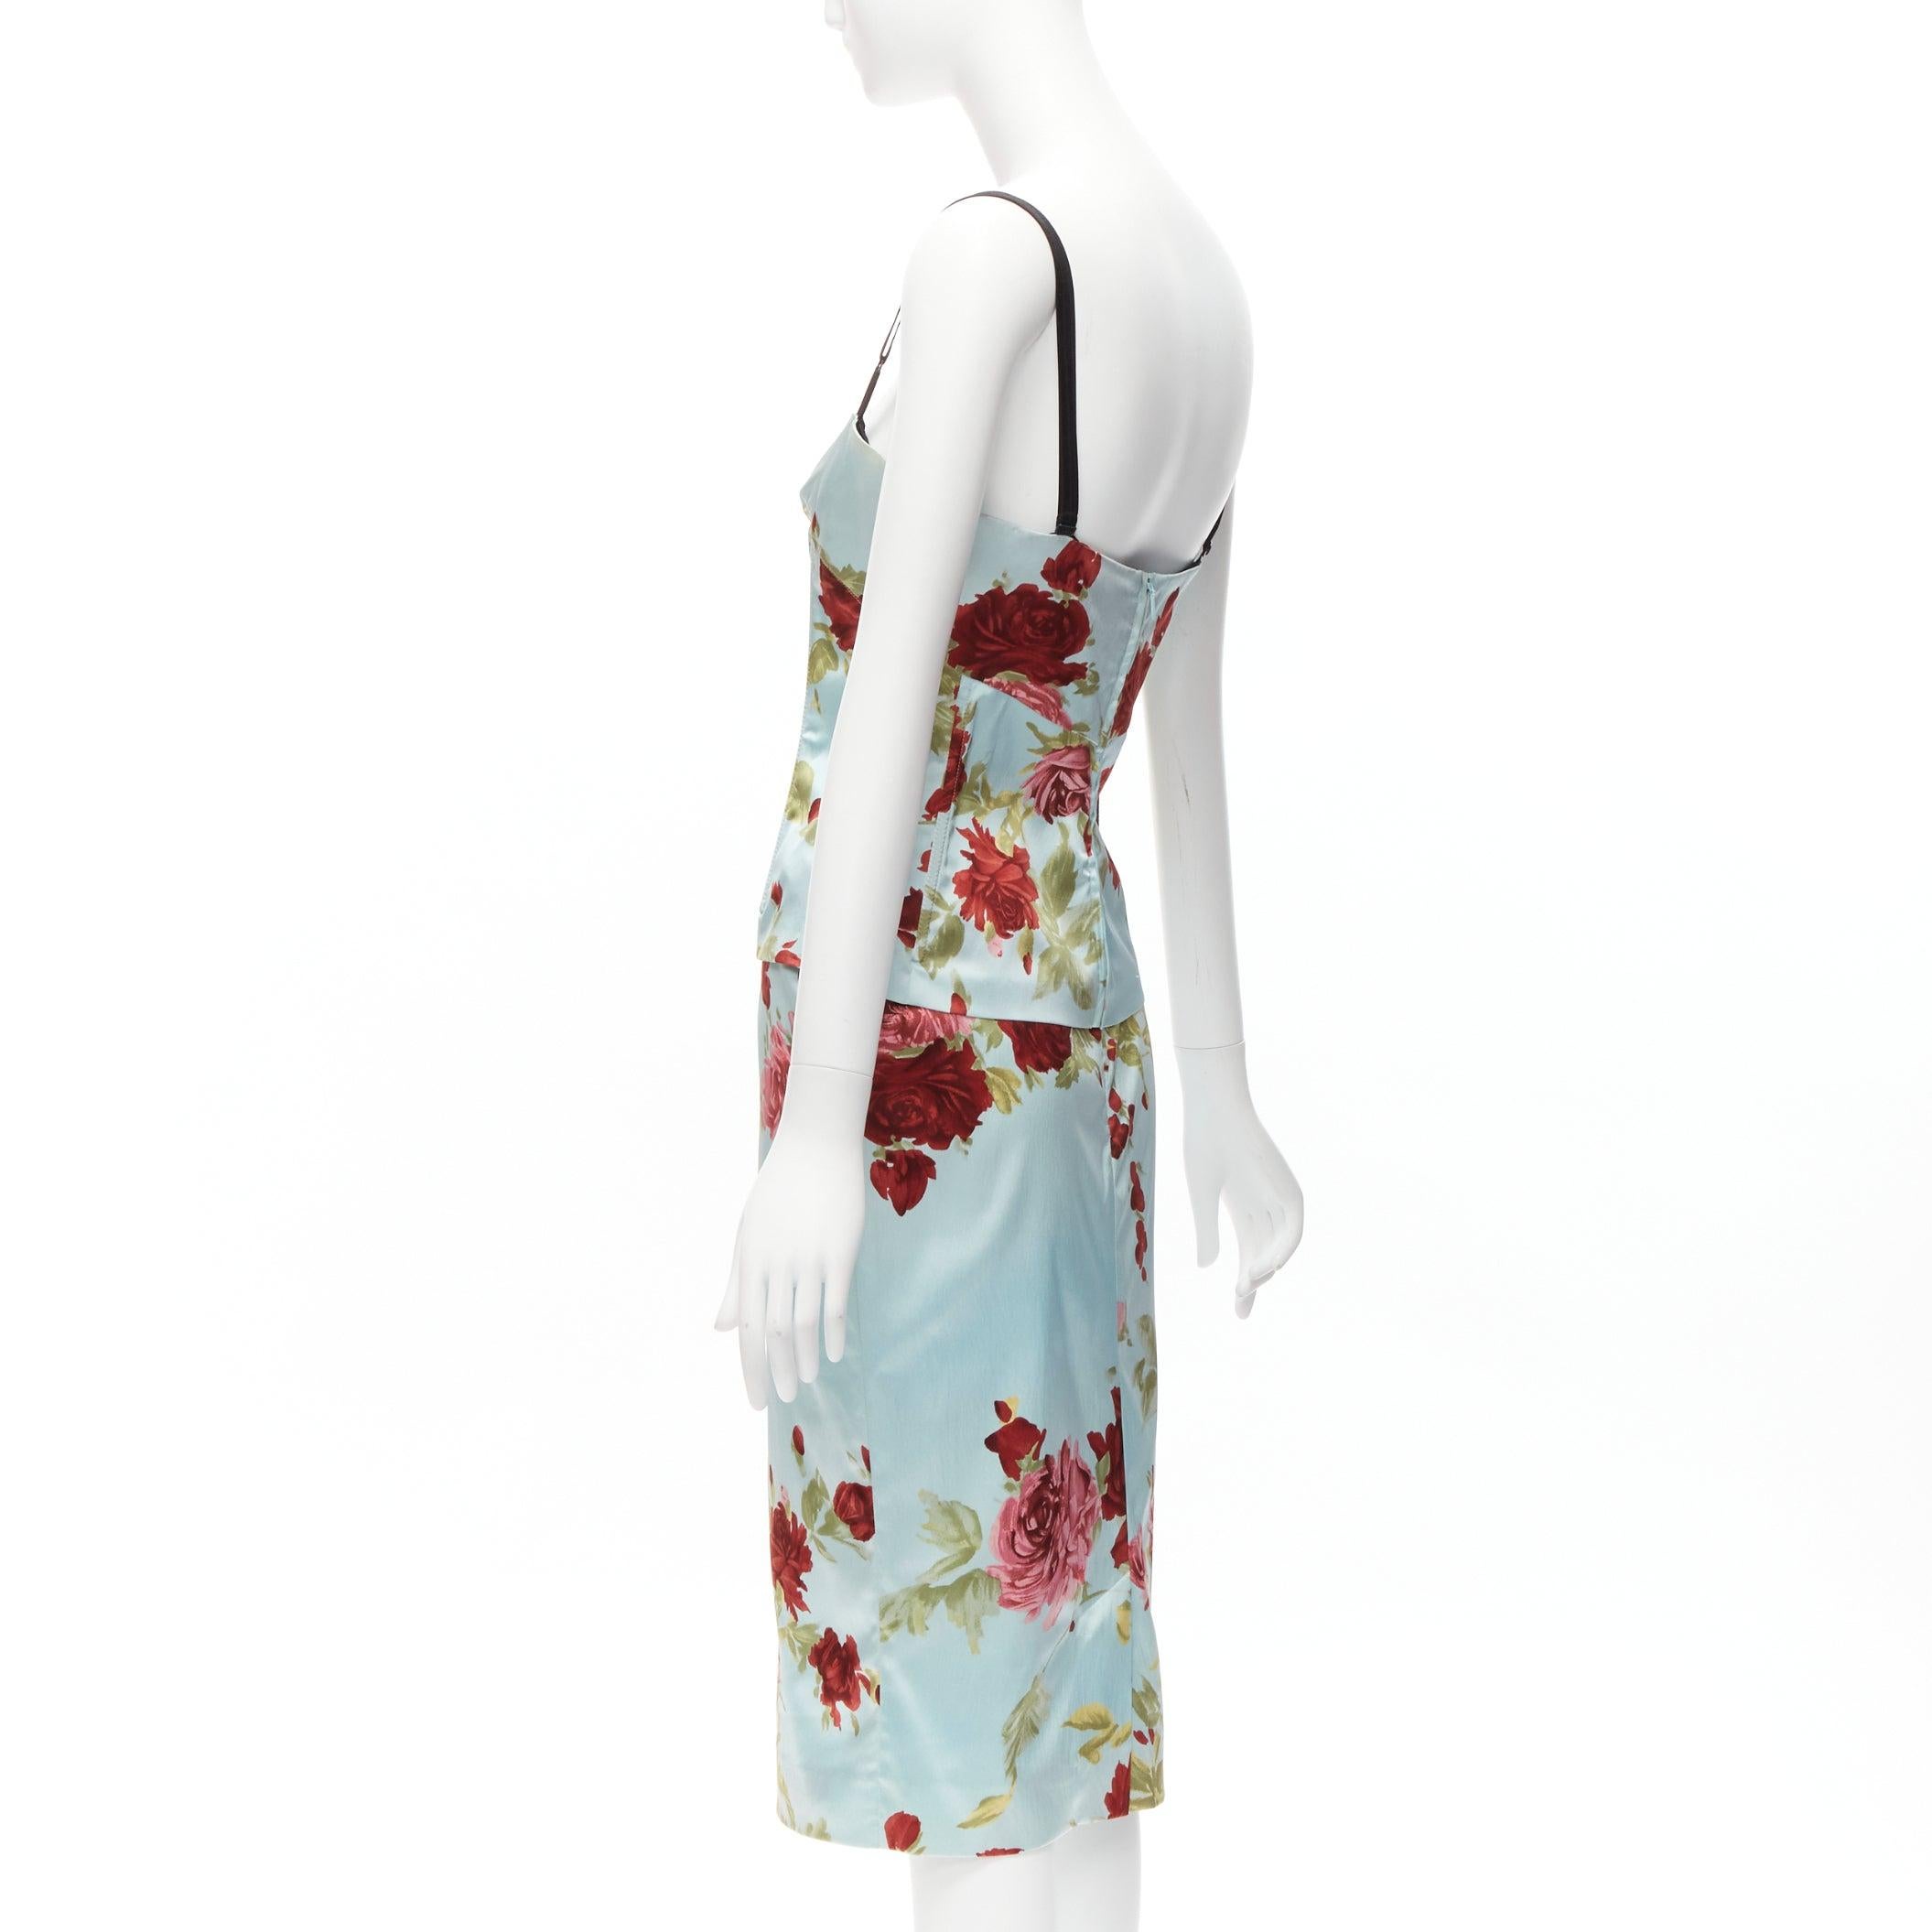 DOLCE GABBANA Vintage floral silk camisole top skirt set IT44 L Carrie Bradshaw For Sale 2